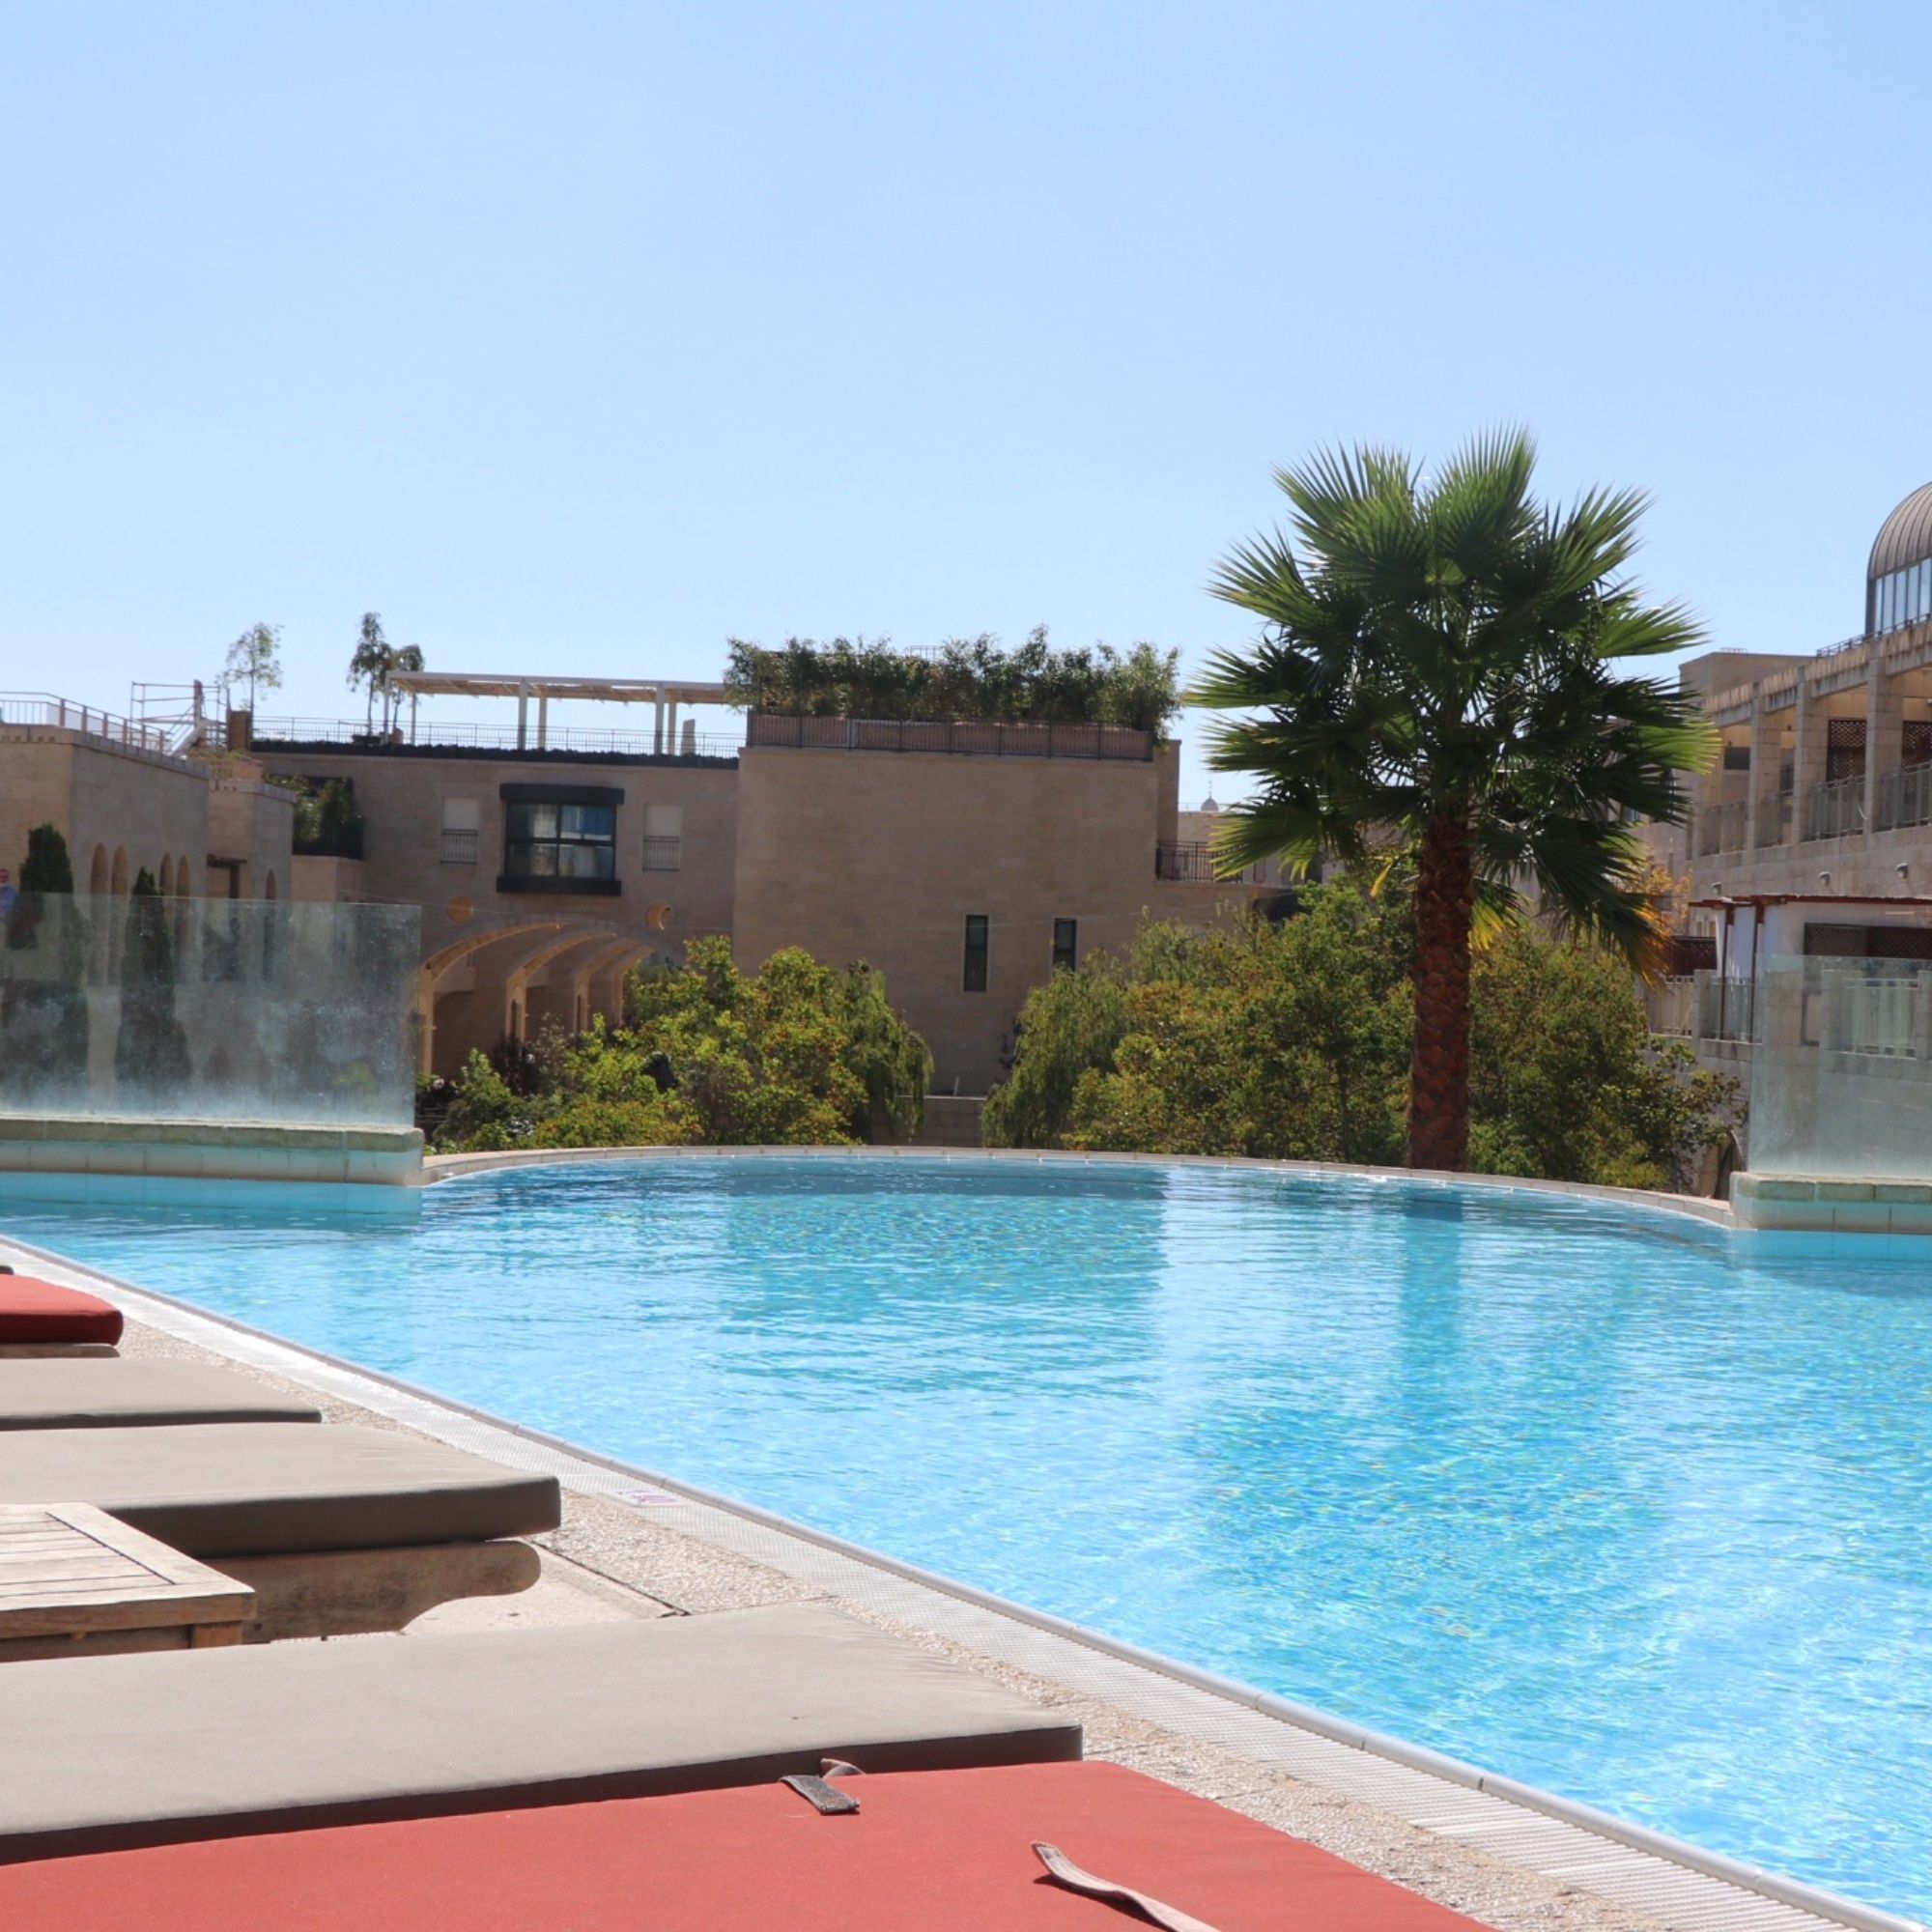 David Citadel Hotel - Swimming pool in Jerusalem